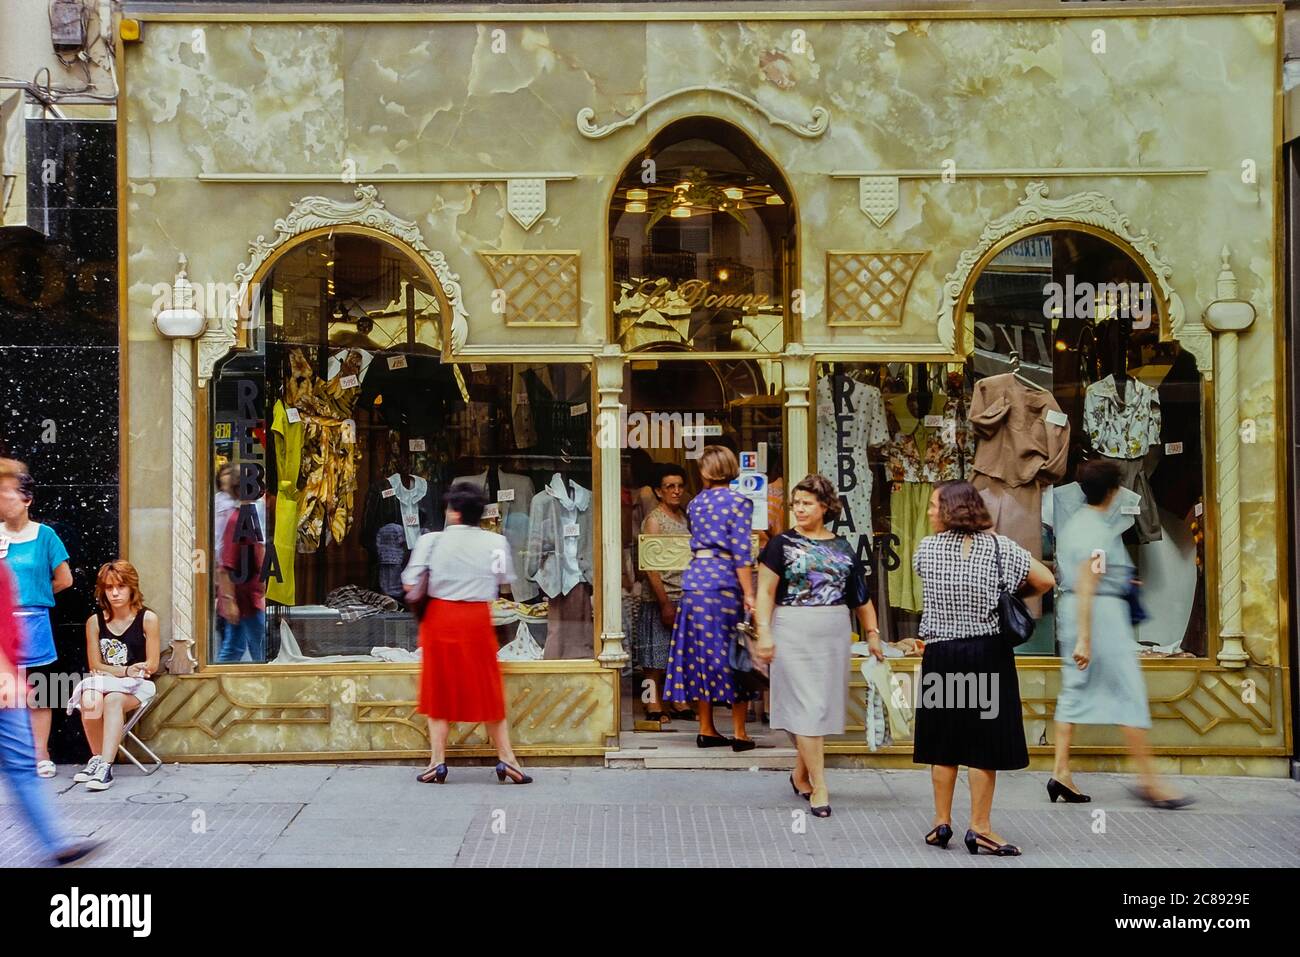 Facade of La Donna women's boutique, Madrid, Spain. 1990 Stock Photo